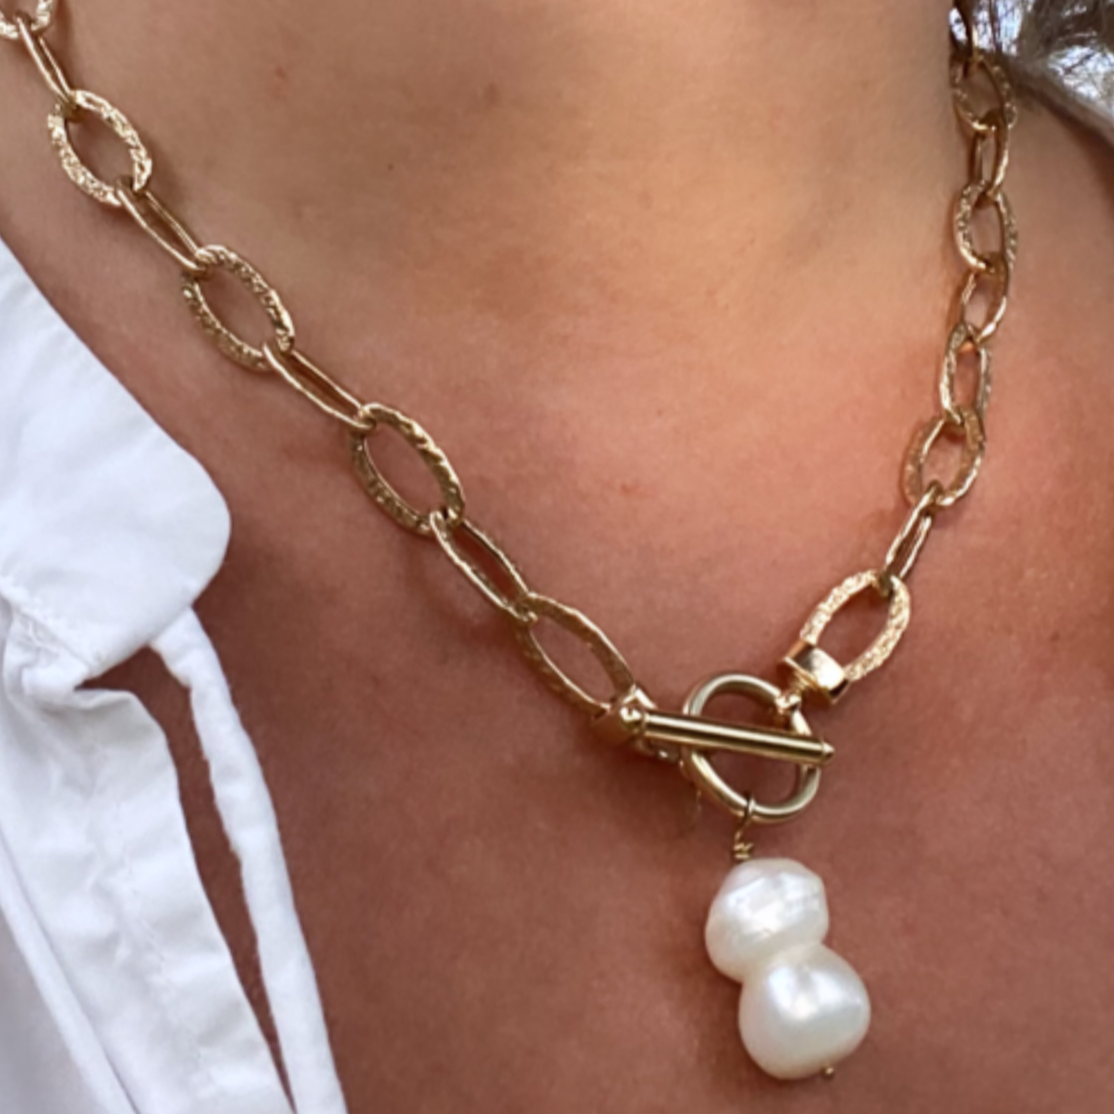 Sisterhood Necklace - Chunky Chain Necklace